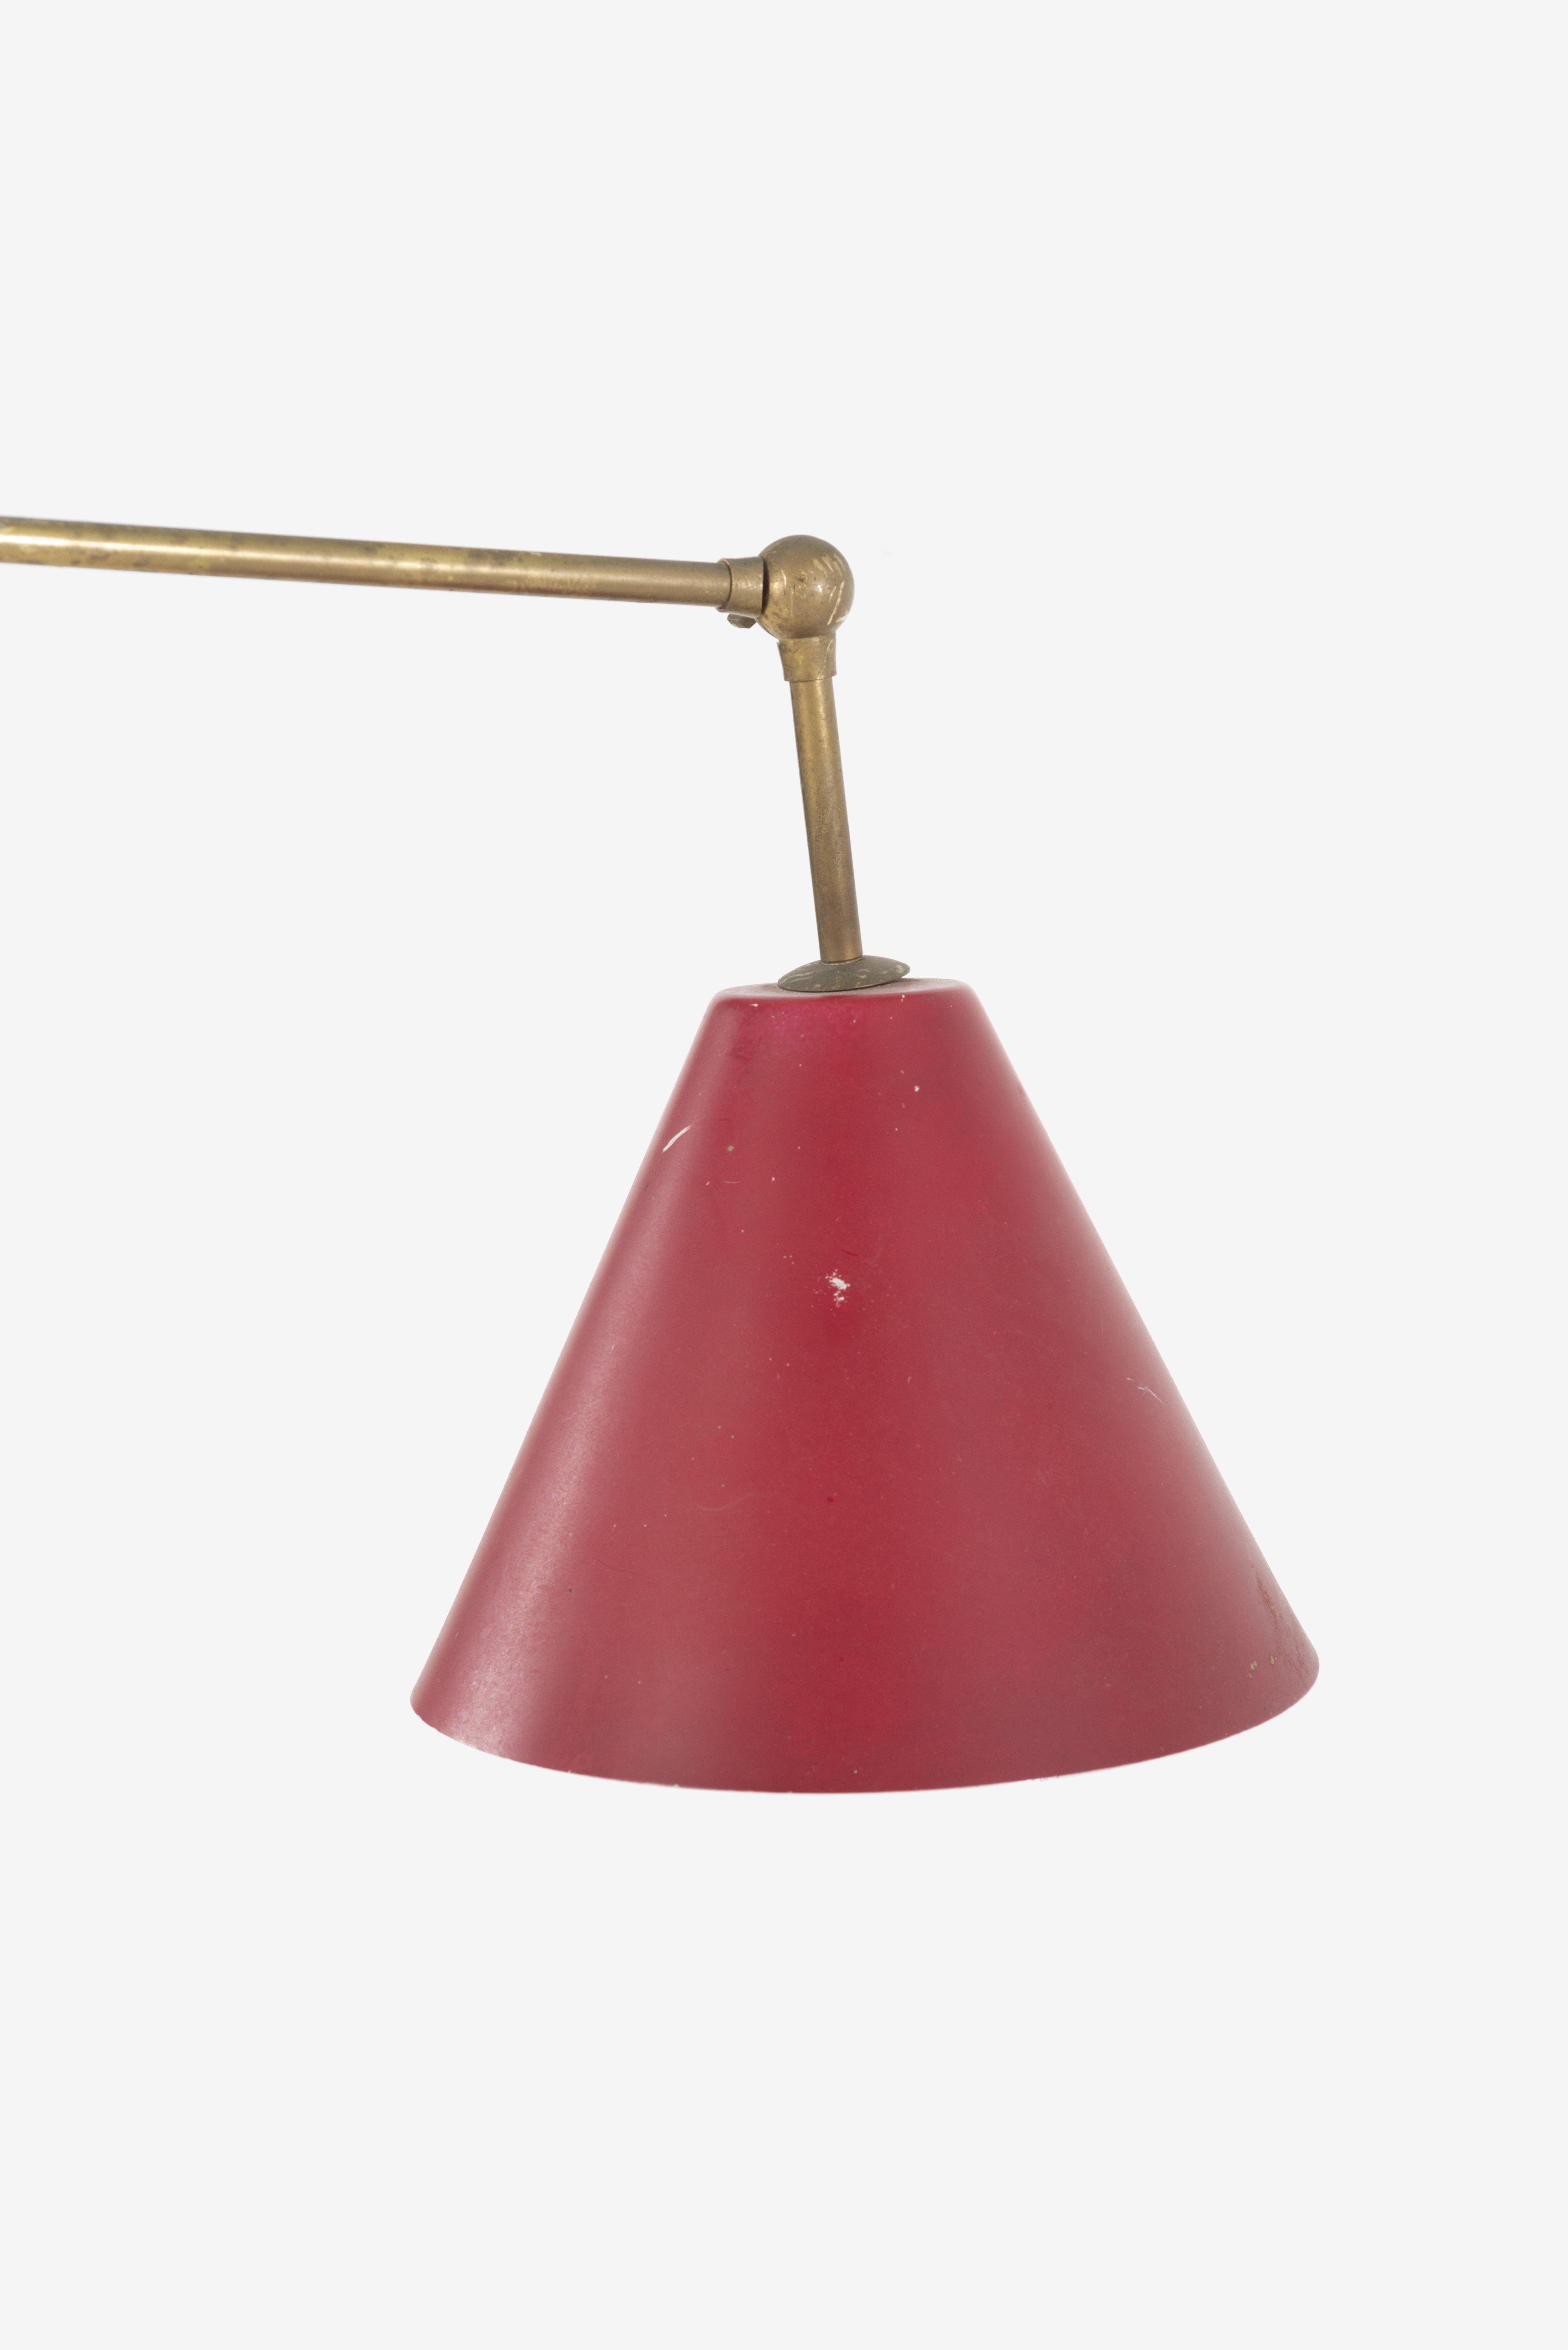 Angelo Lelii for Arredoluce, Triennale Floor Lamp, Model 12128 7